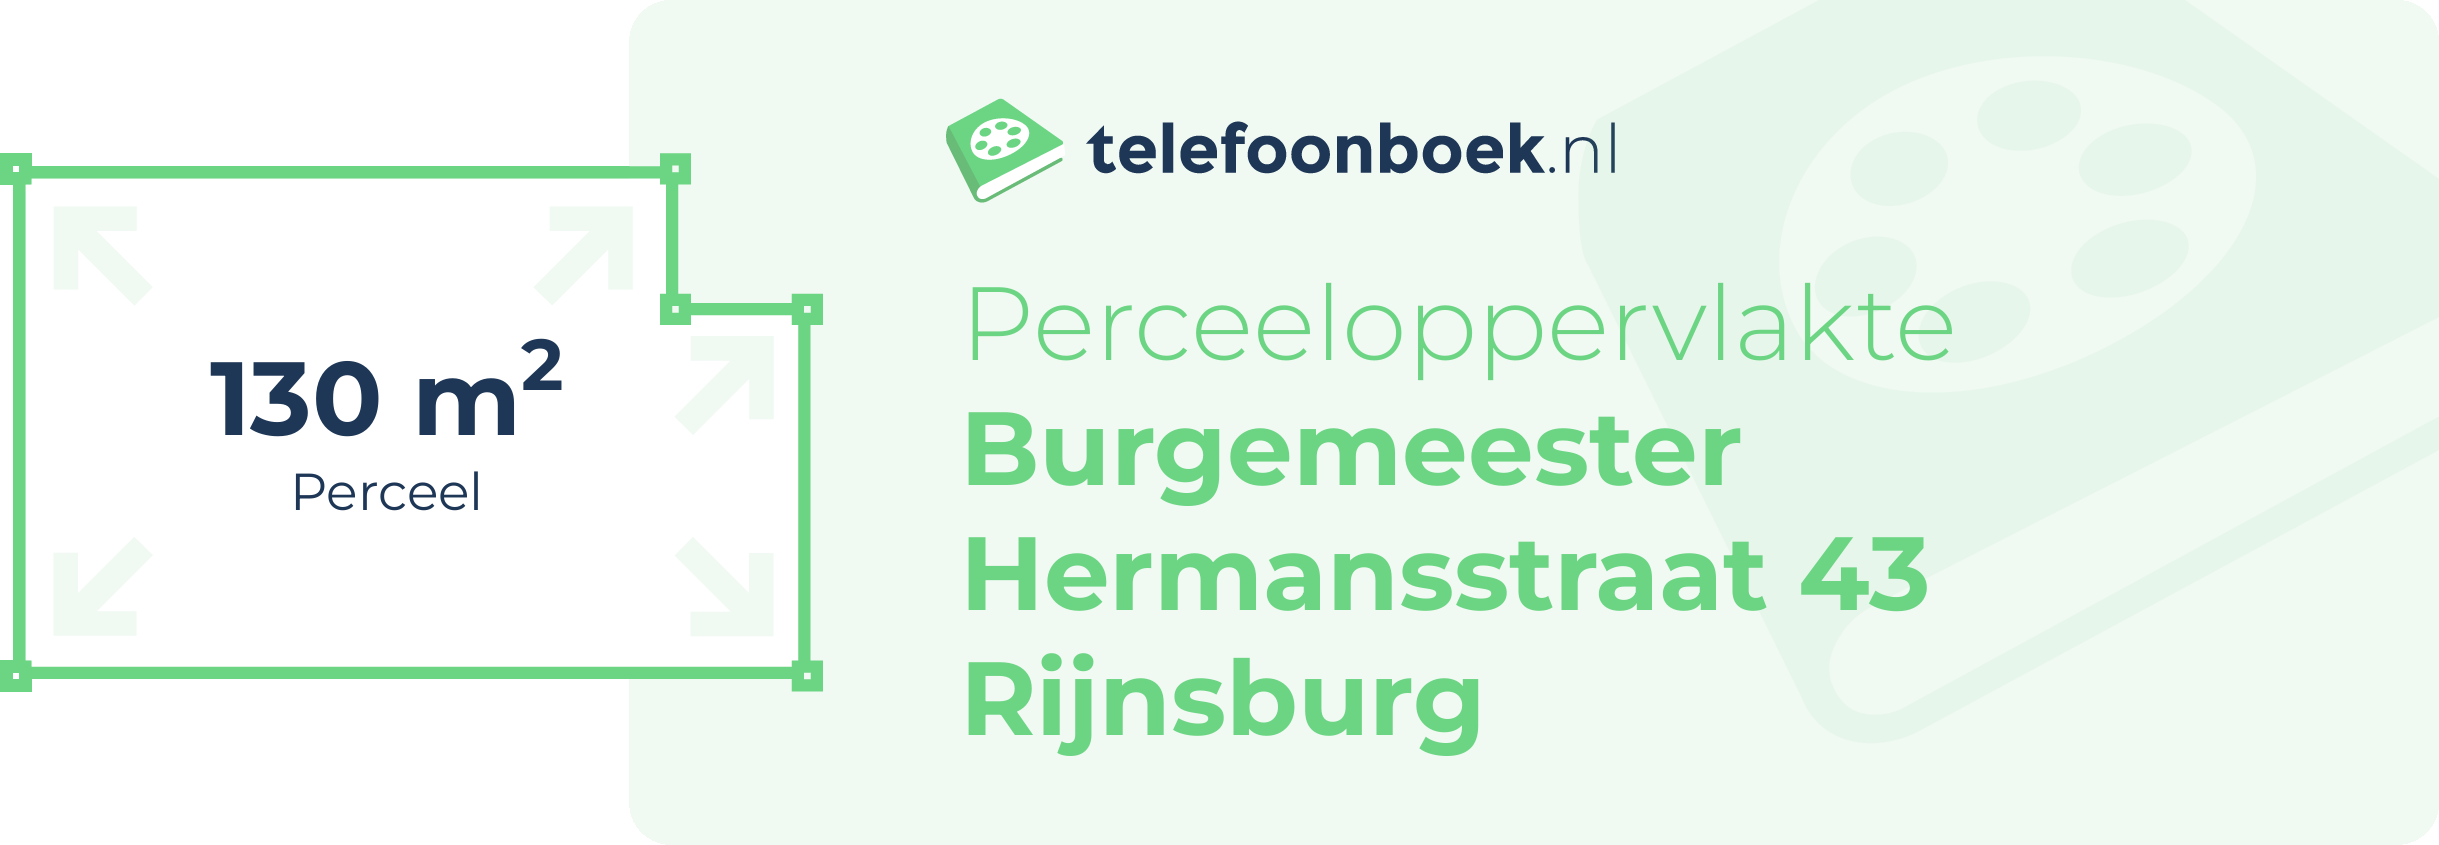 Perceeloppervlakte Burgemeester Hermansstraat 43 Rijnsburg